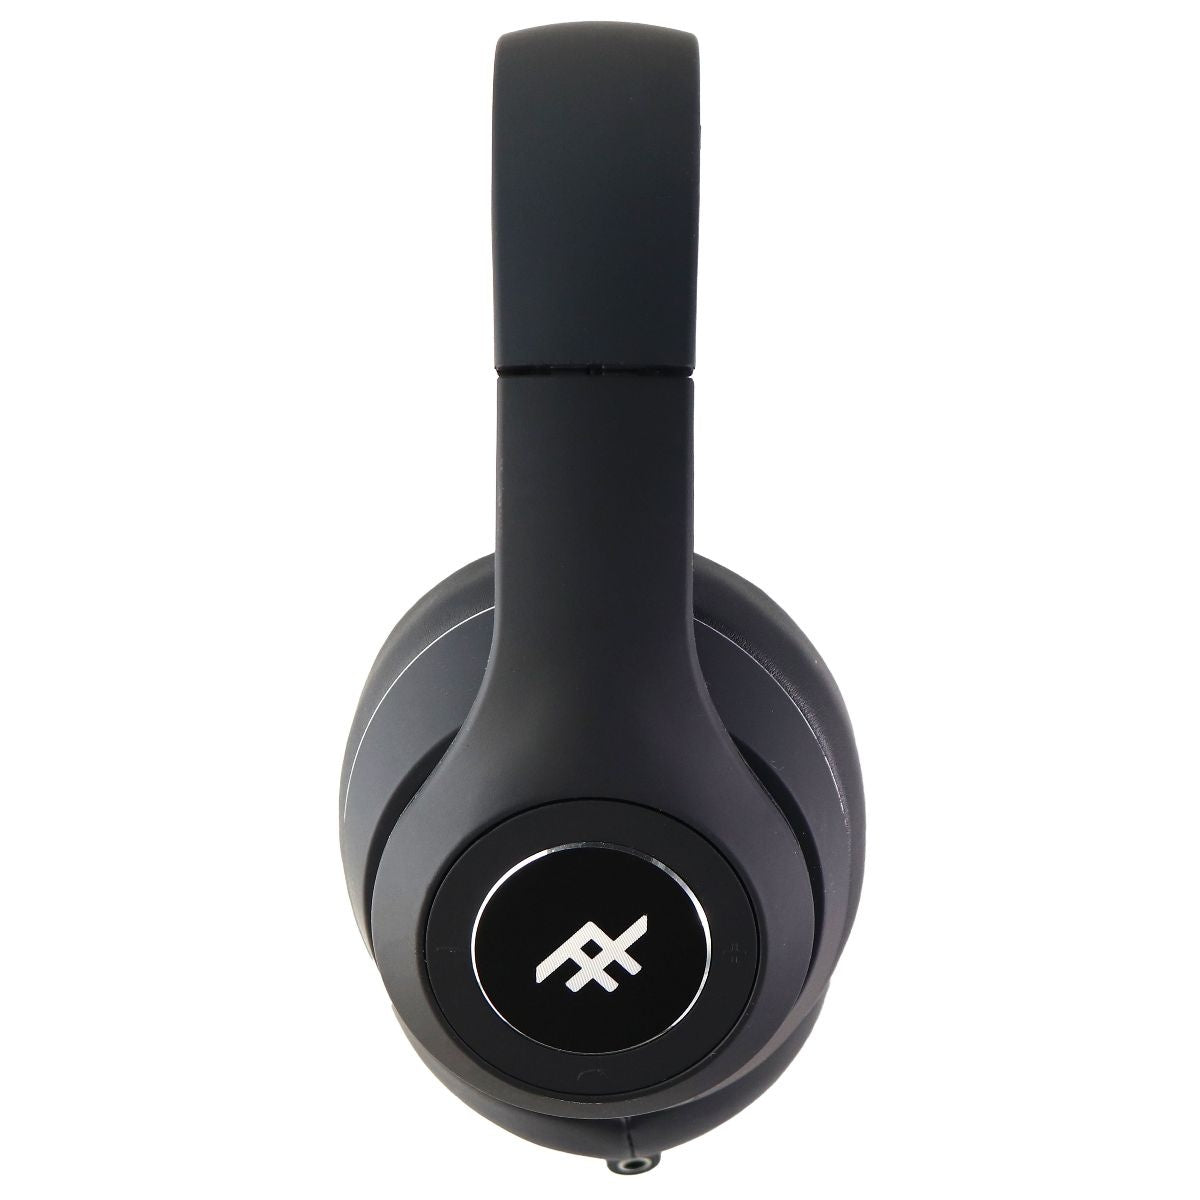 iFrogz Impuse 2 Series Wireless Folding Headphones - Black Portable Audio - Headphones iFrogz    - Simple Cell Bulk Wholesale Pricing - USA Seller